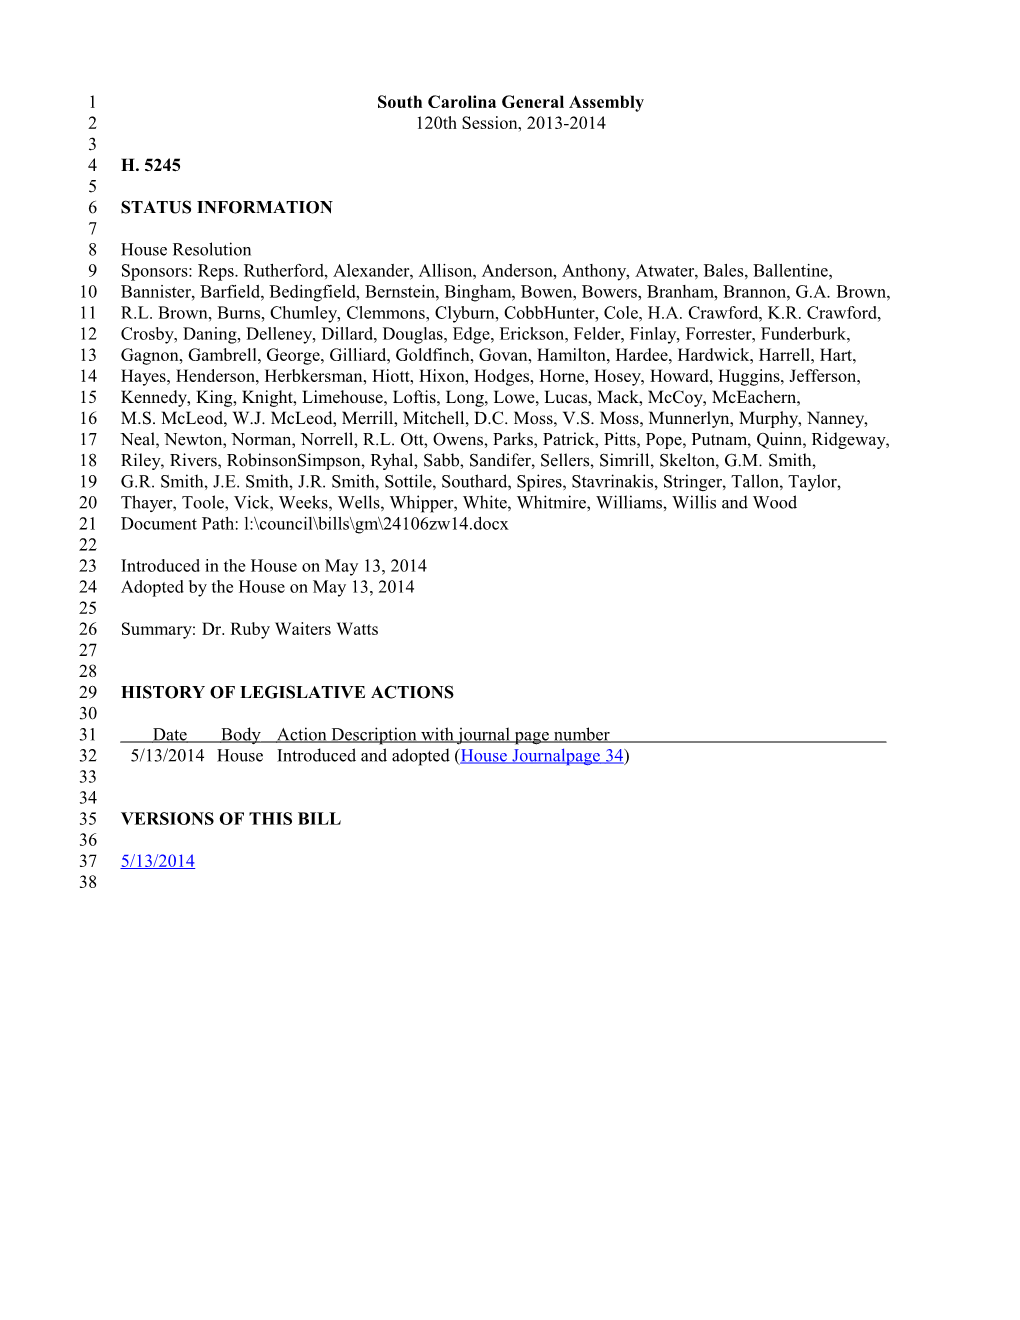 2013-2014 Bill 5245: Dr. Ruby Waiters Watts - South Carolina Legislature Online